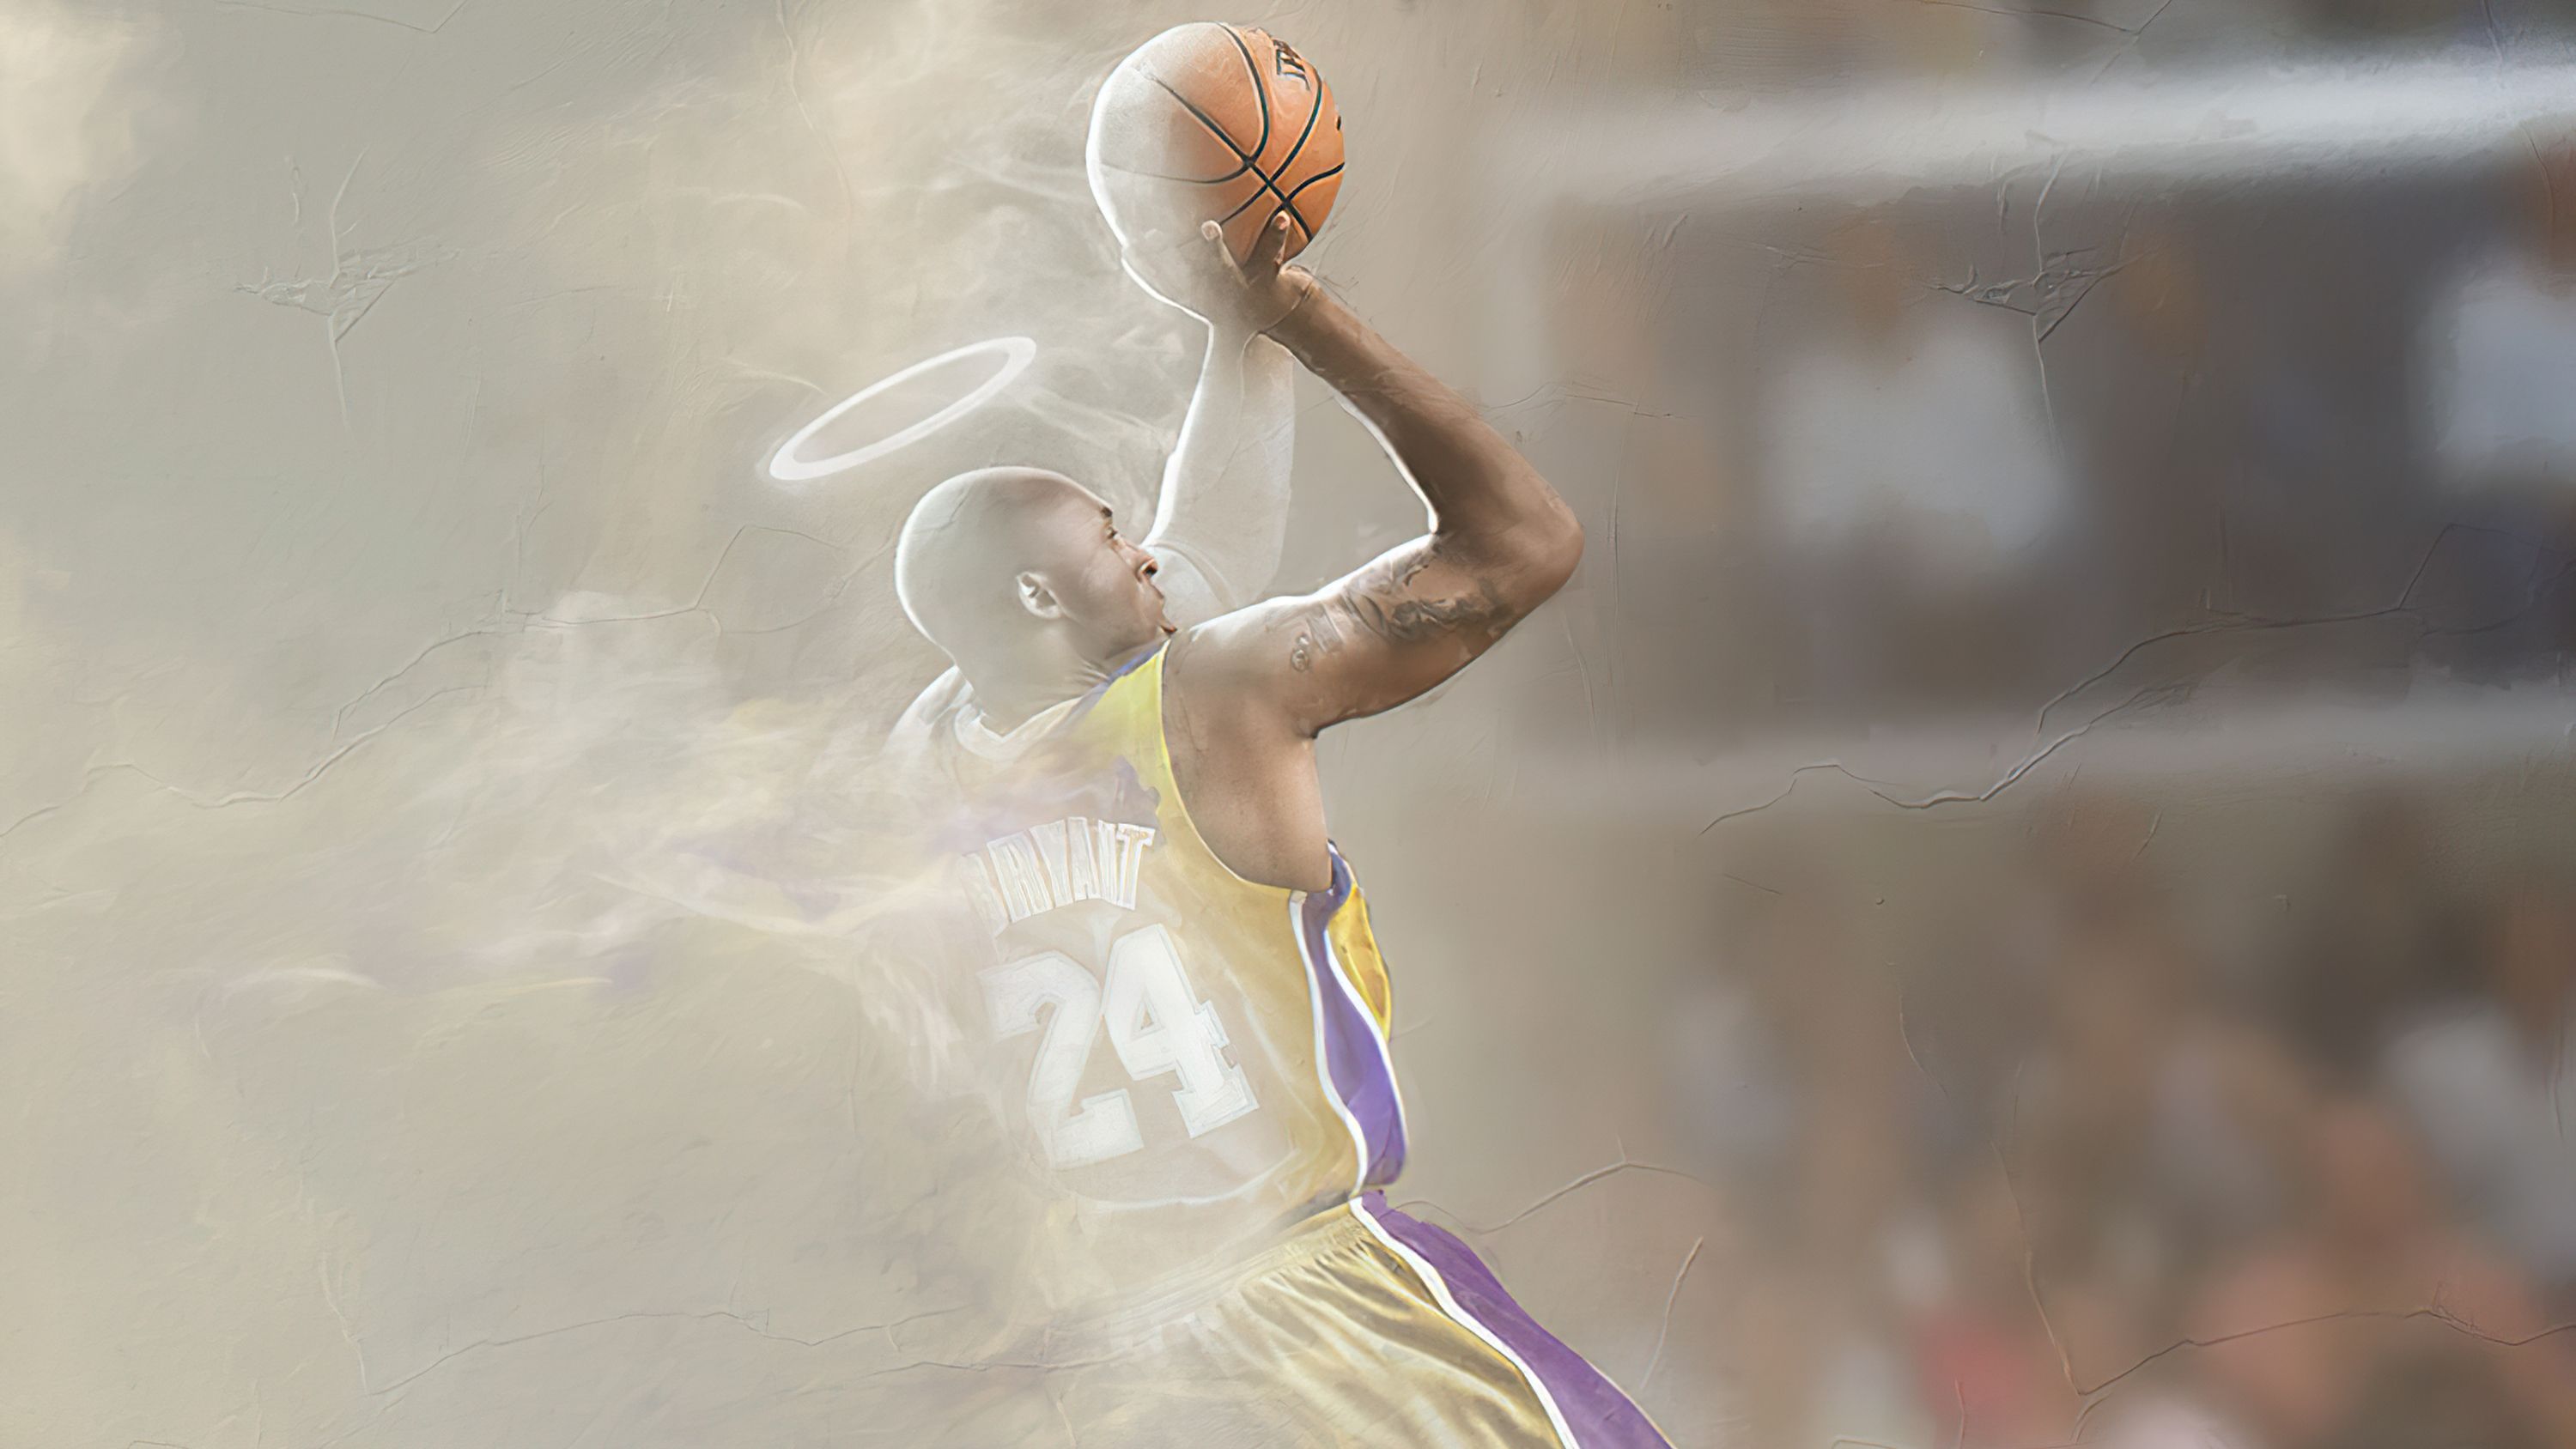 Kobe Bryant Fan Art, HD Sports, 4k Wallpaper, Image, Background, Photo and Picture